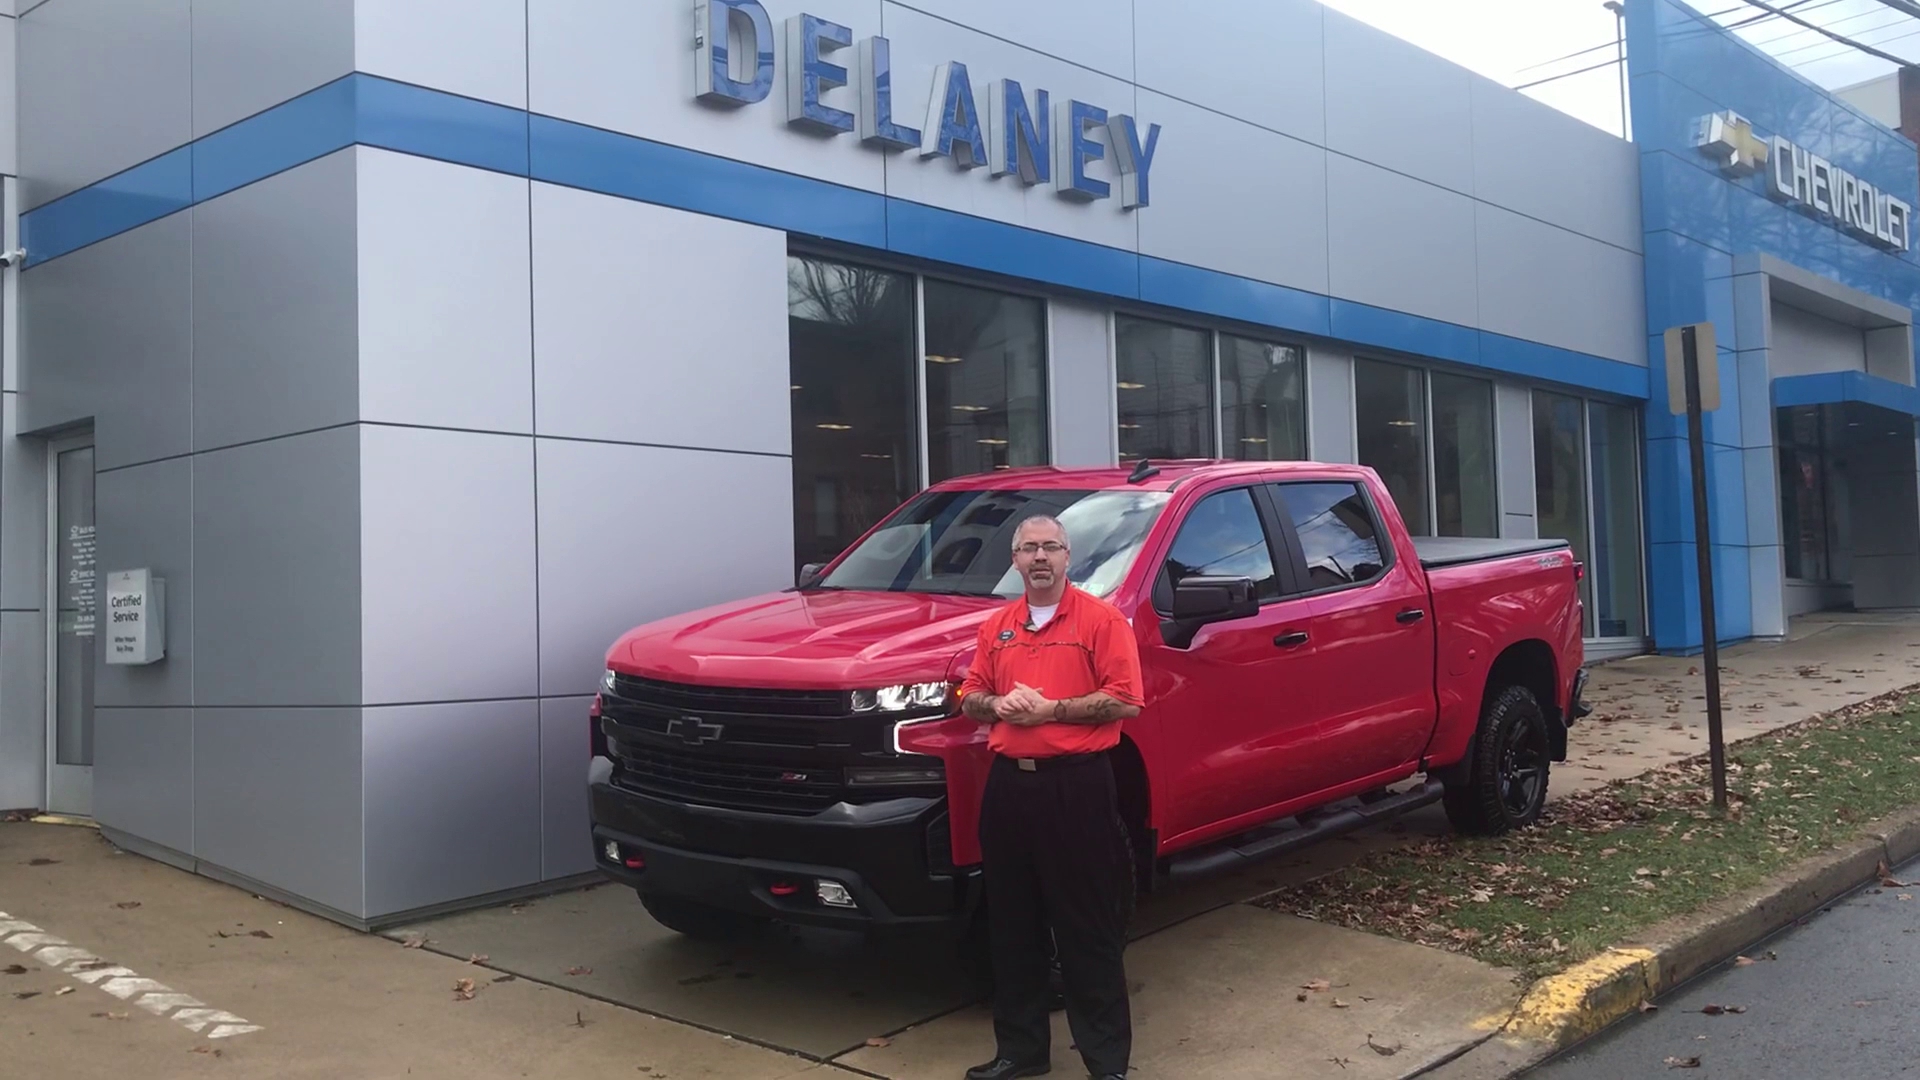 Delaney Chevrolet of Indiana